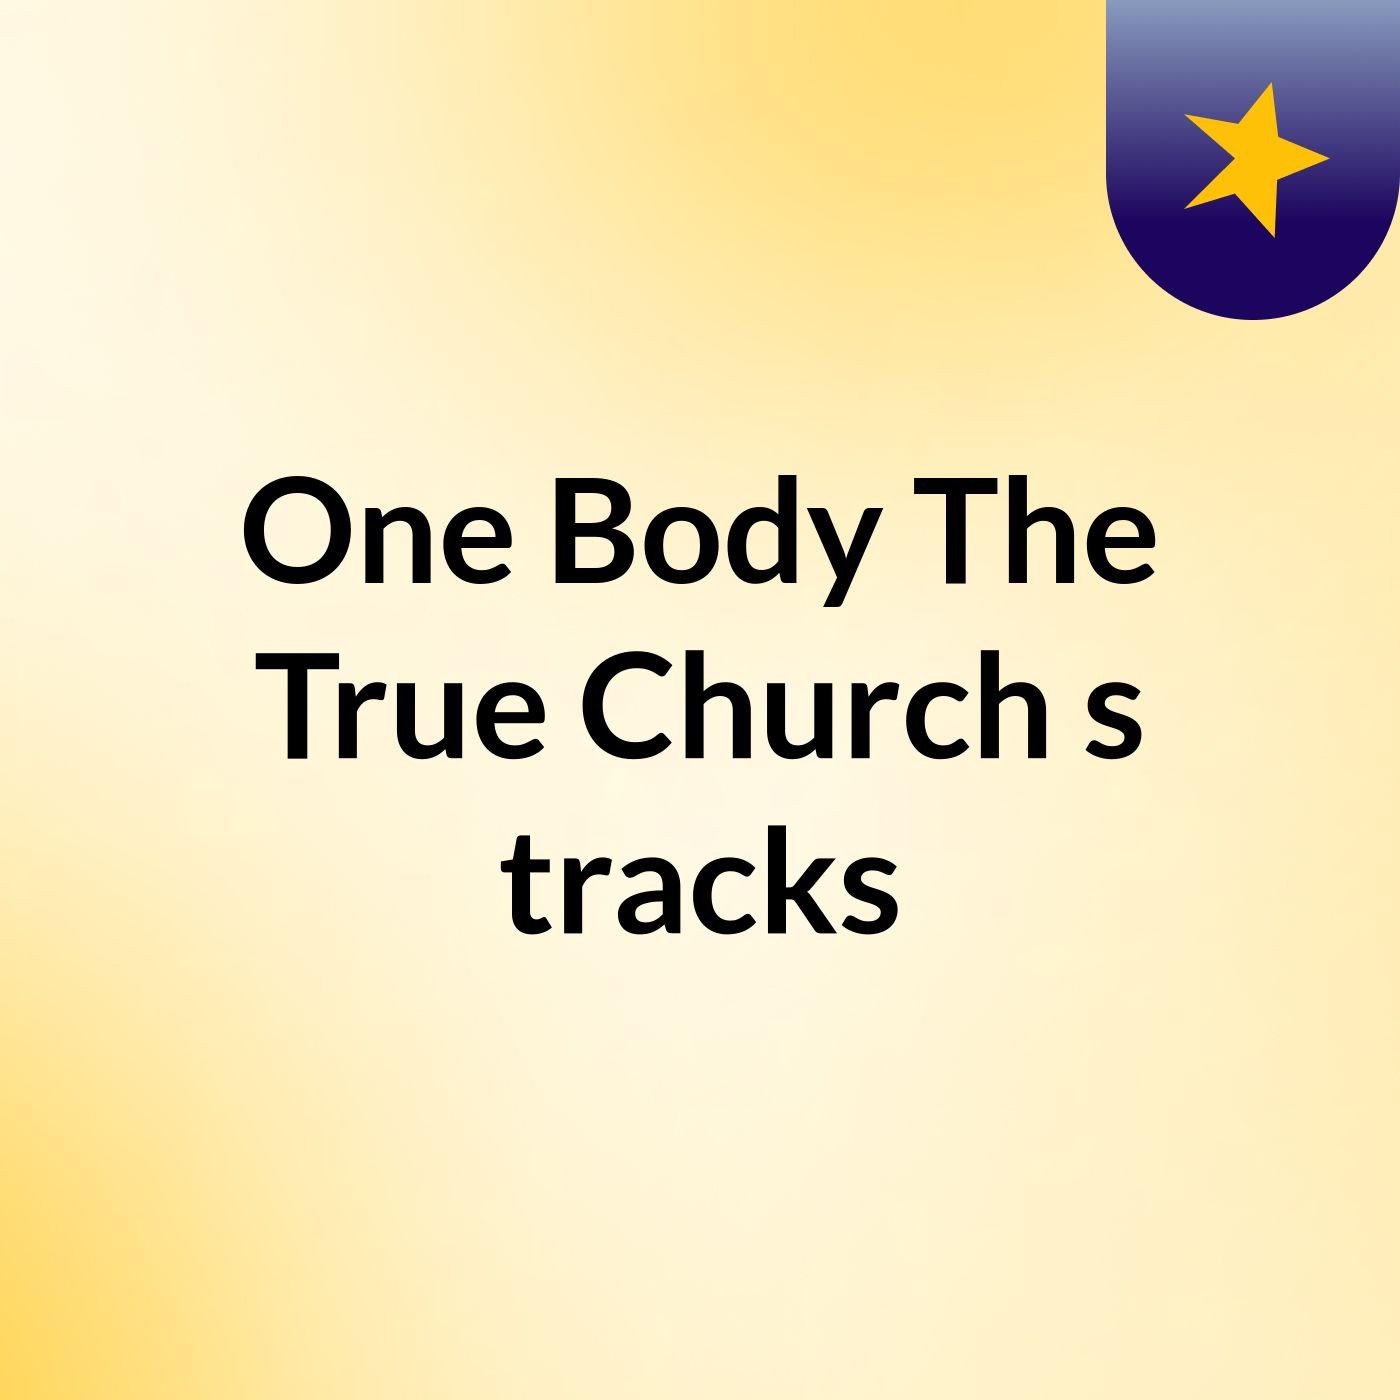 One Body, The True Church's tracks